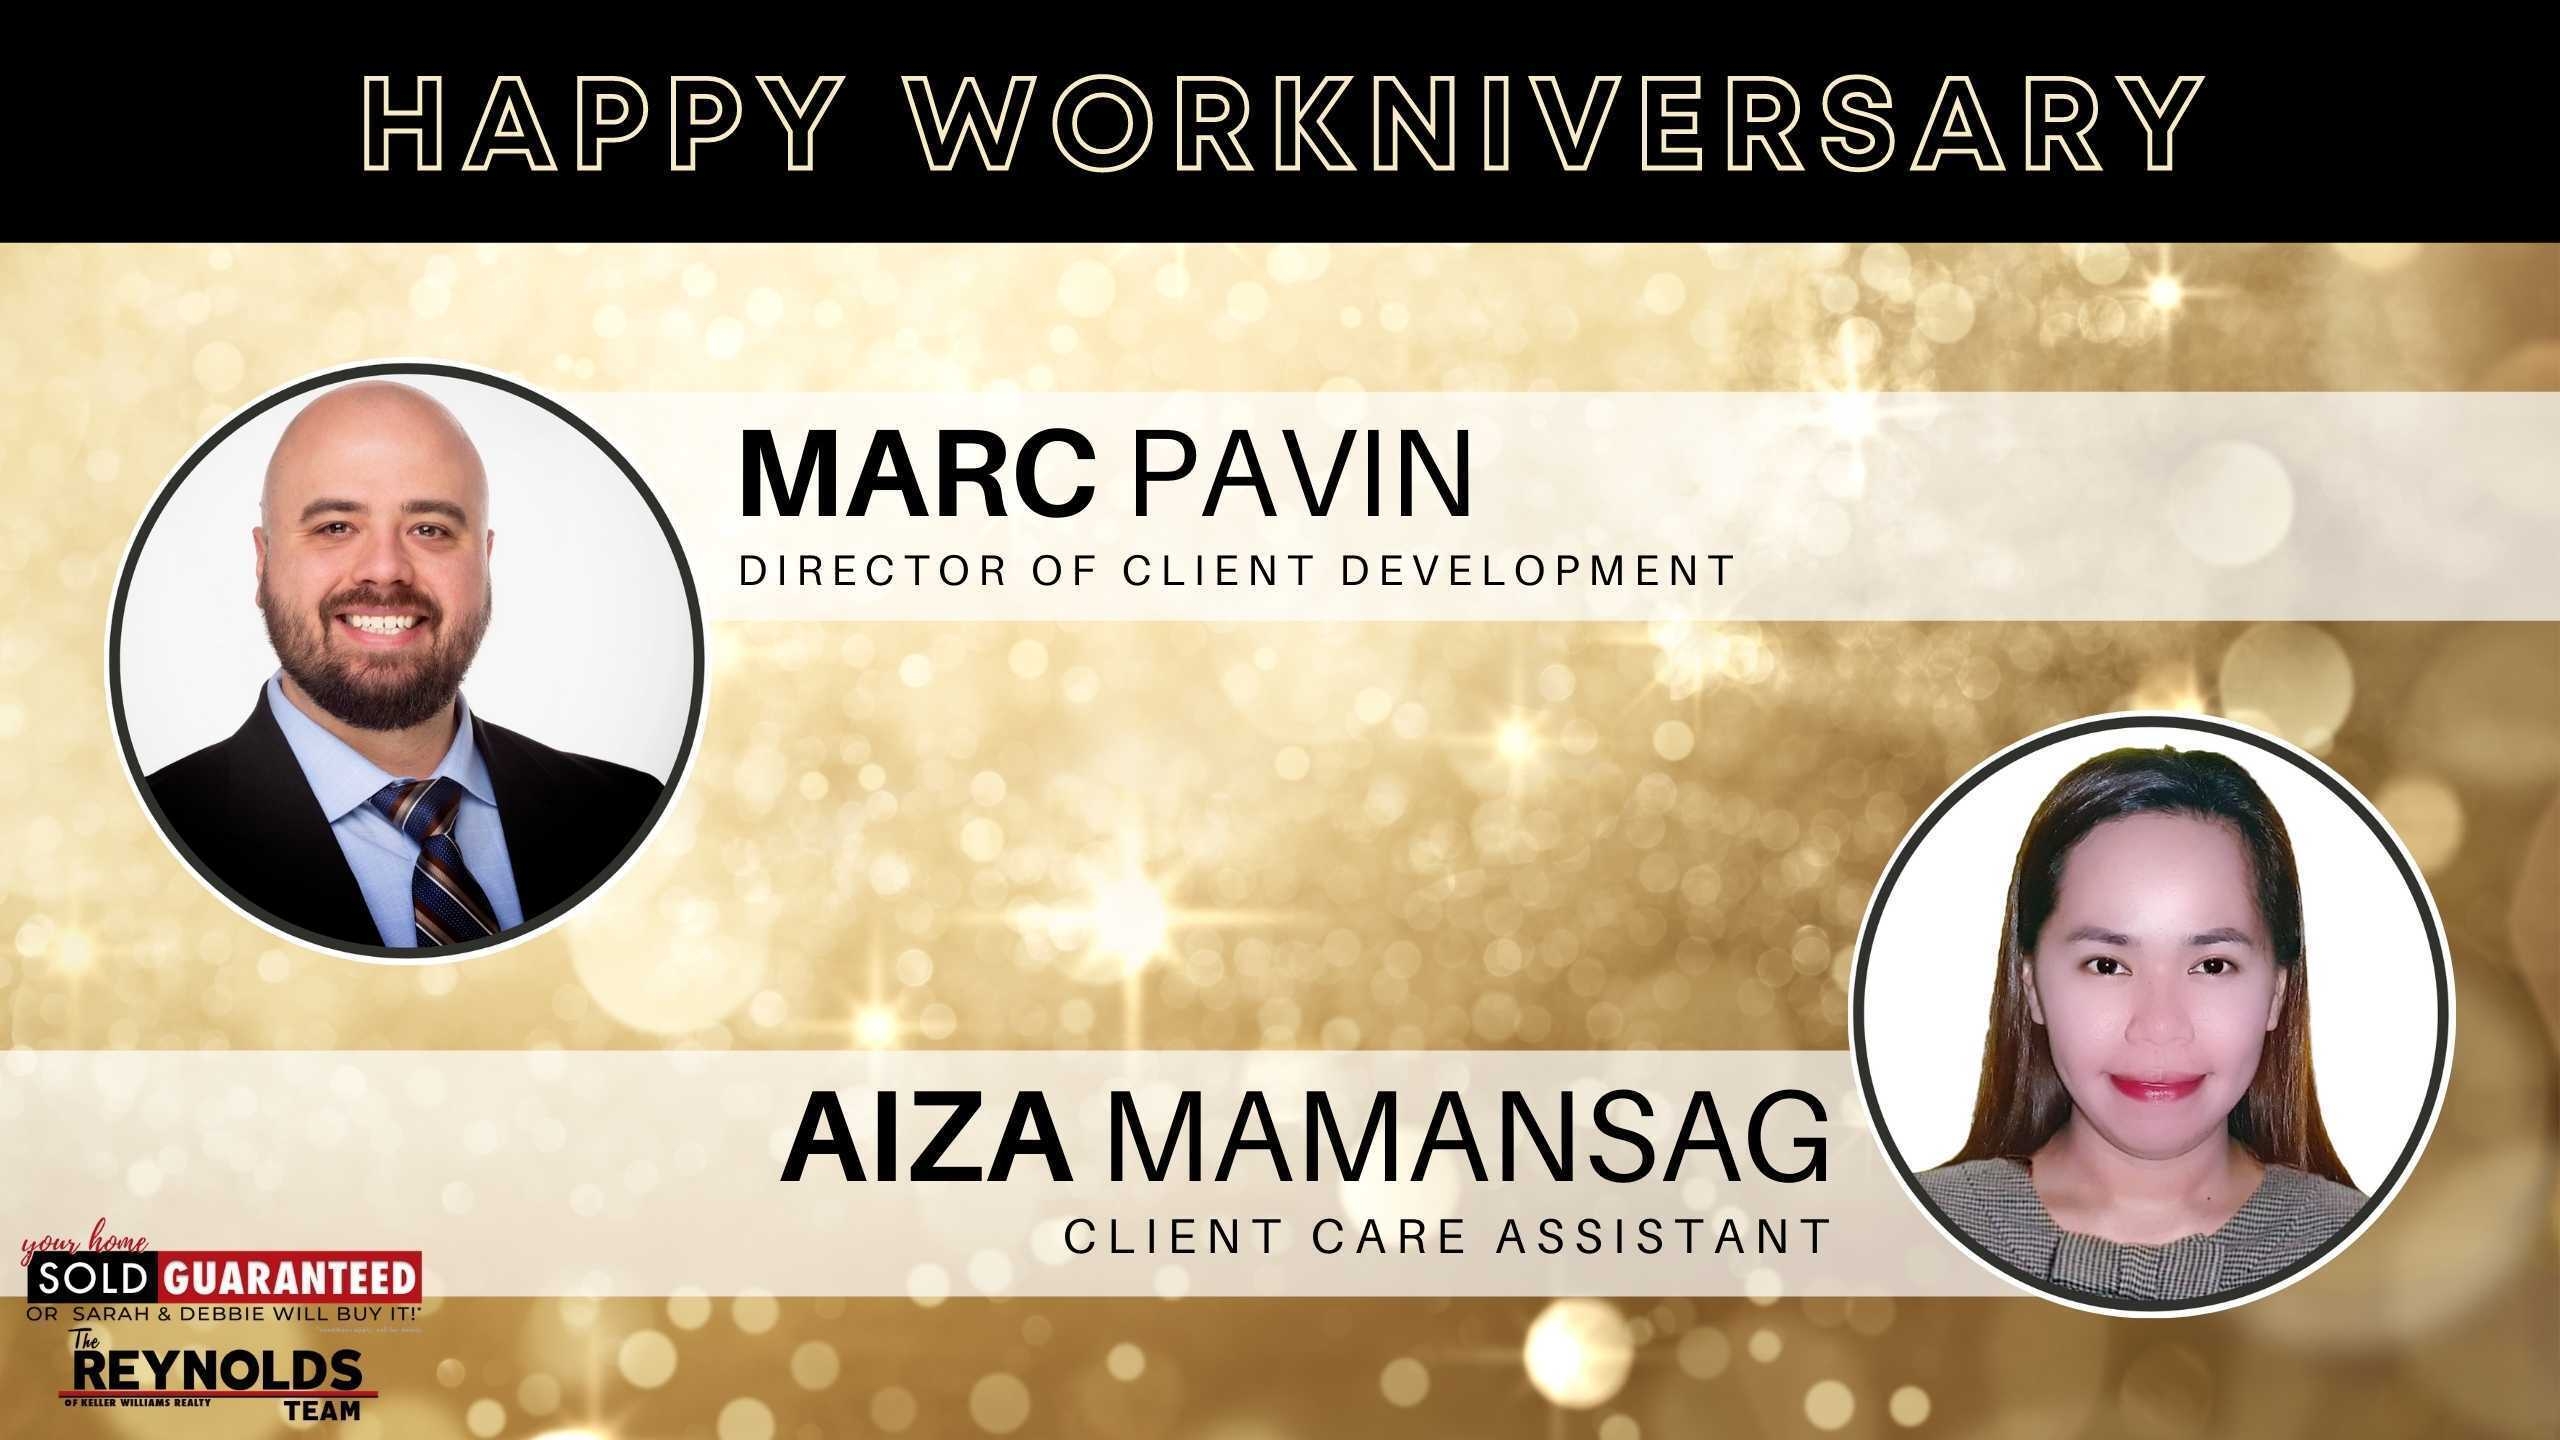 Happy Workniversary, Aiza and Marc!